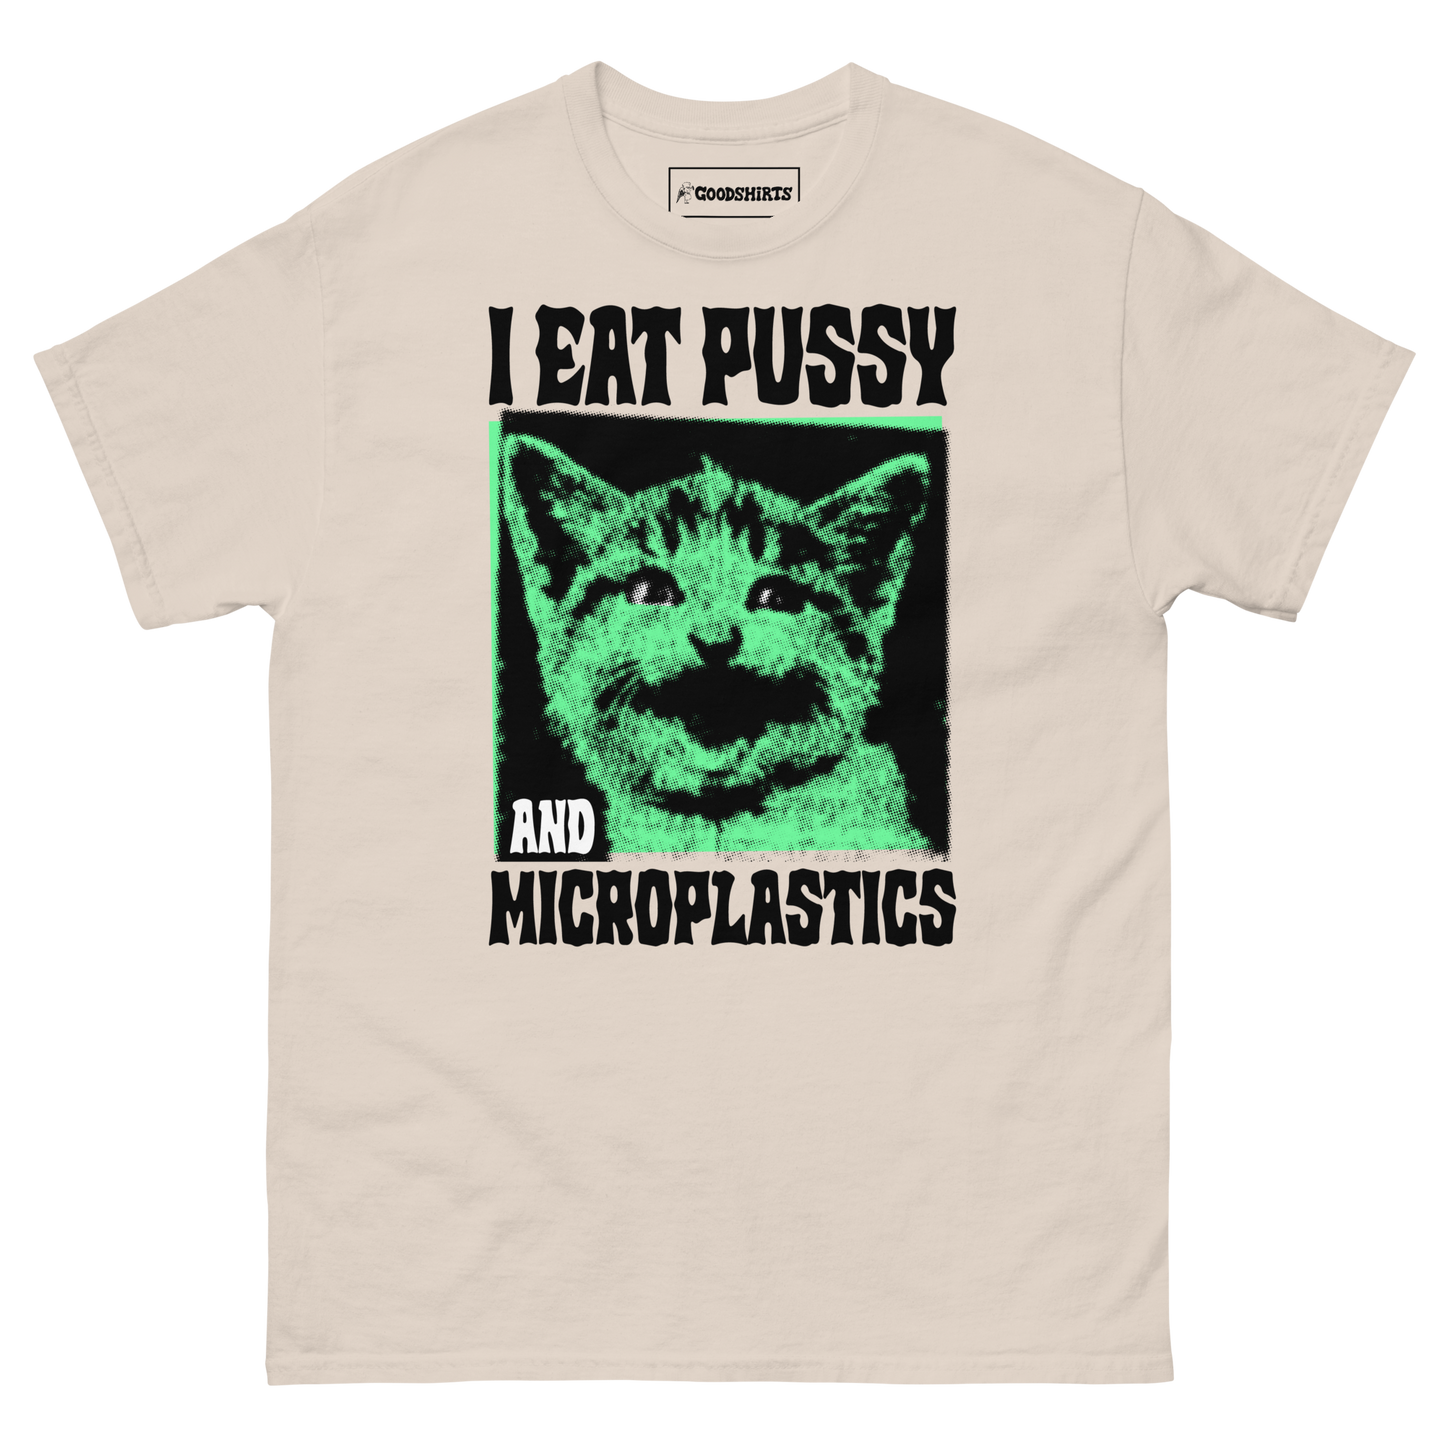 I Eat Pussy And Microplastics.